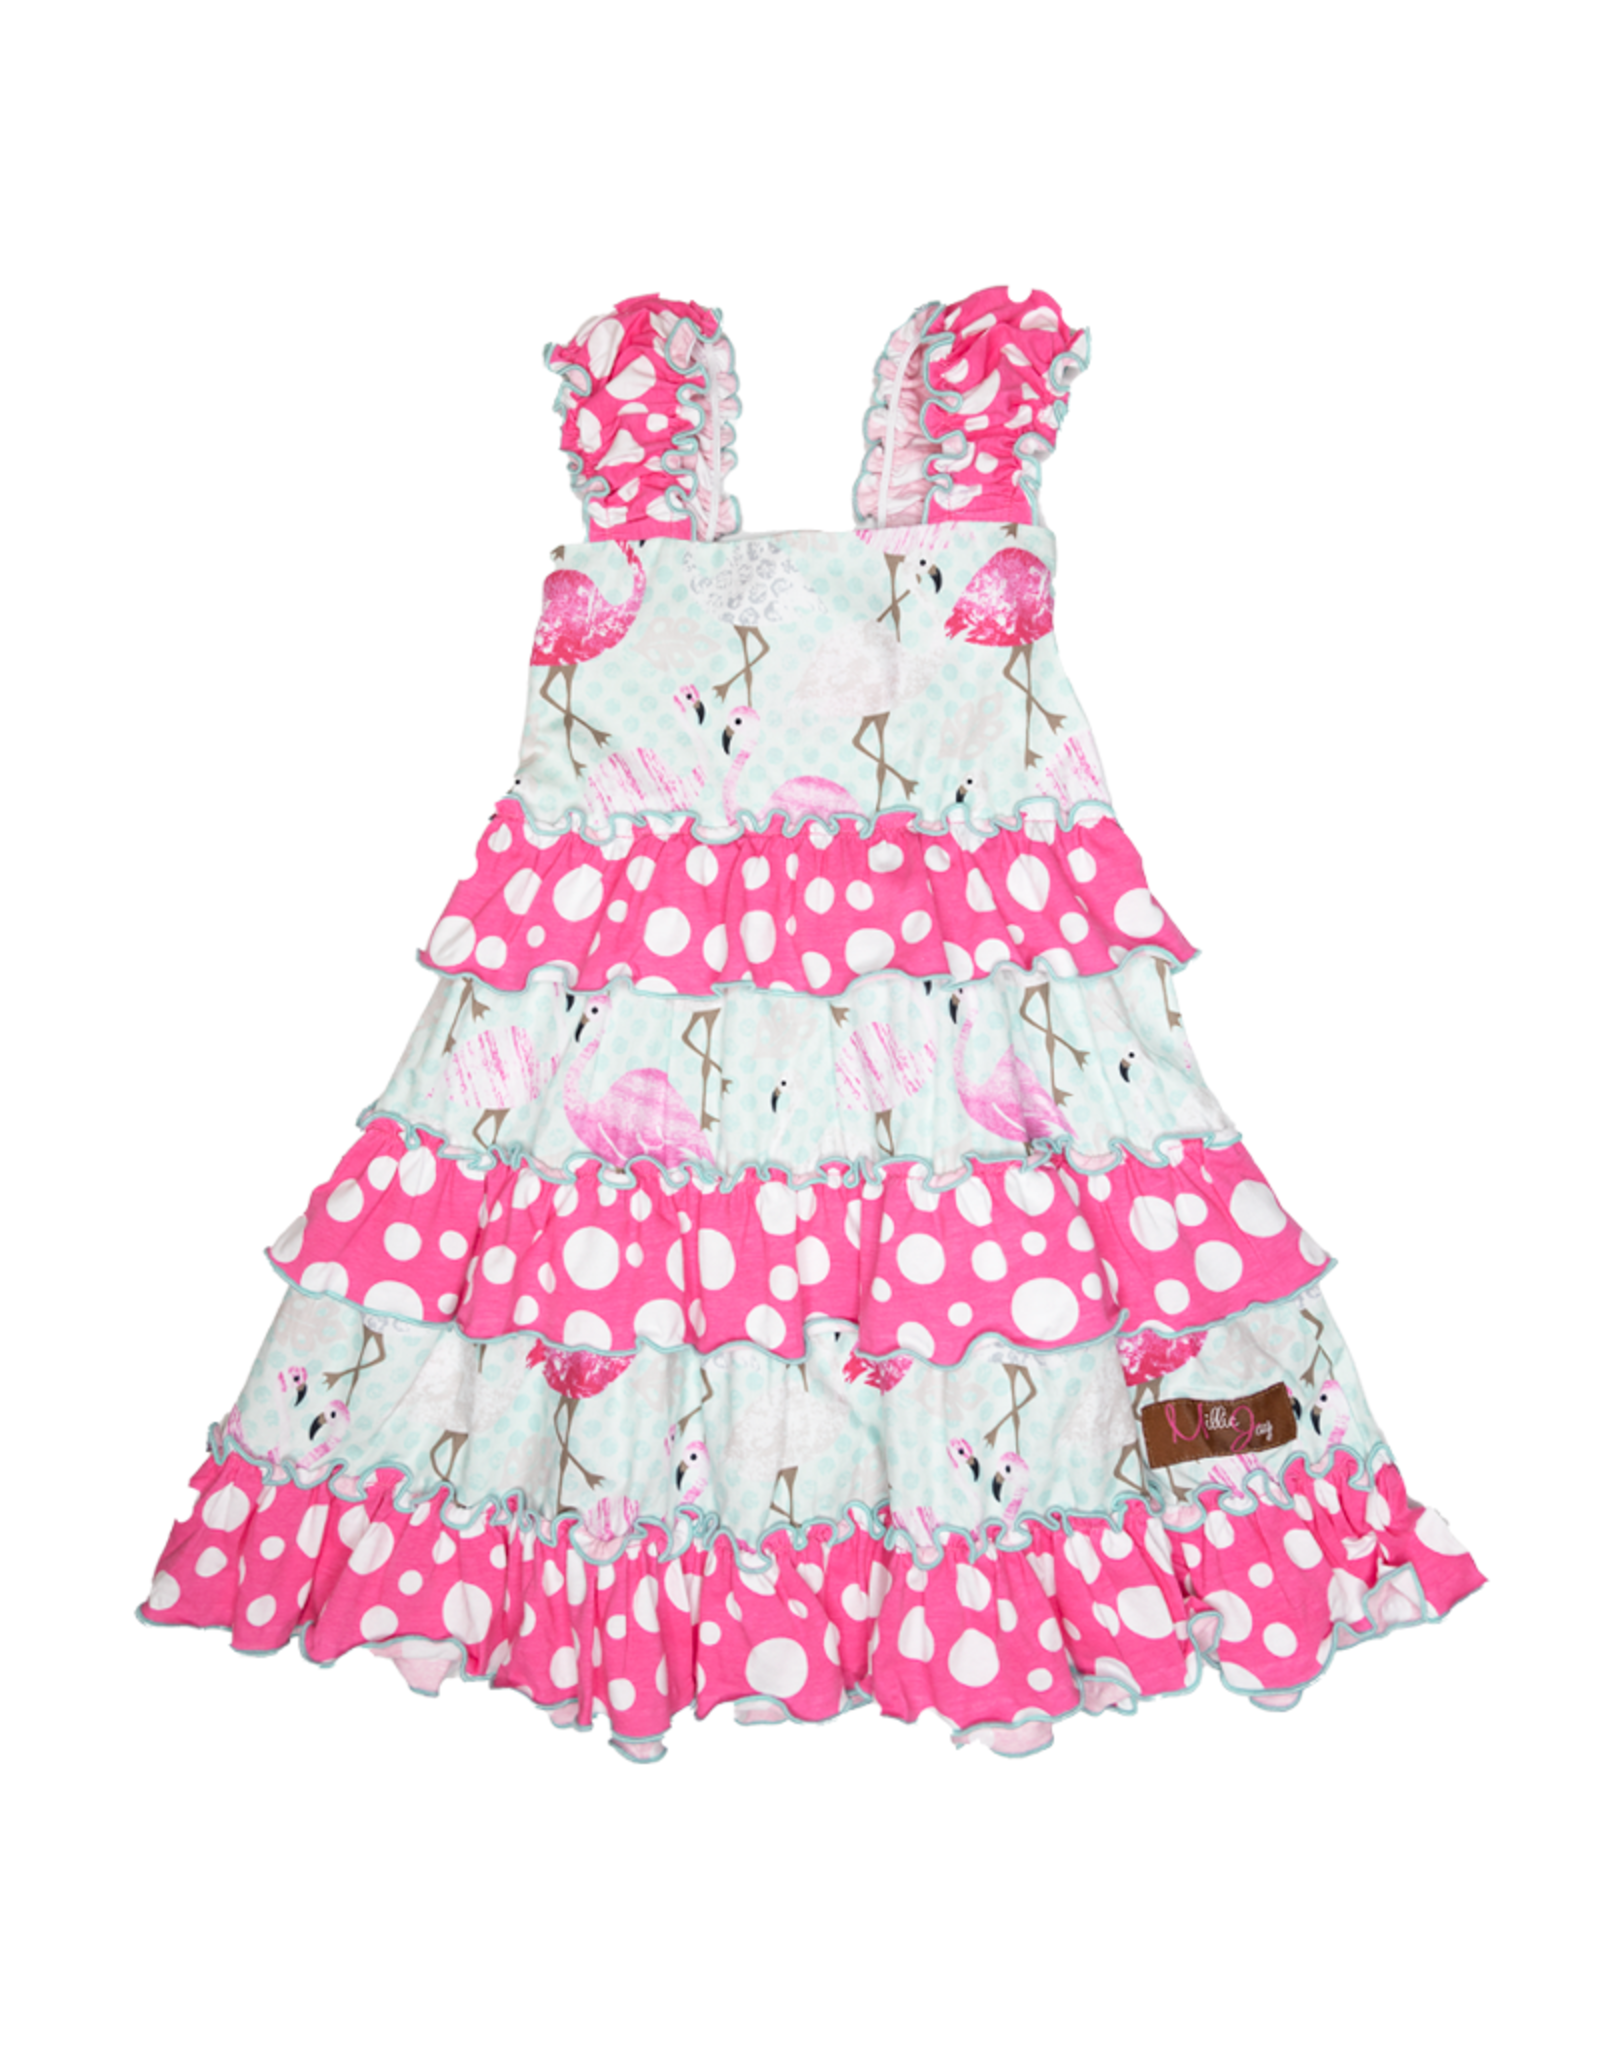 Millie Jay 626 Flamingo Maxi Dress